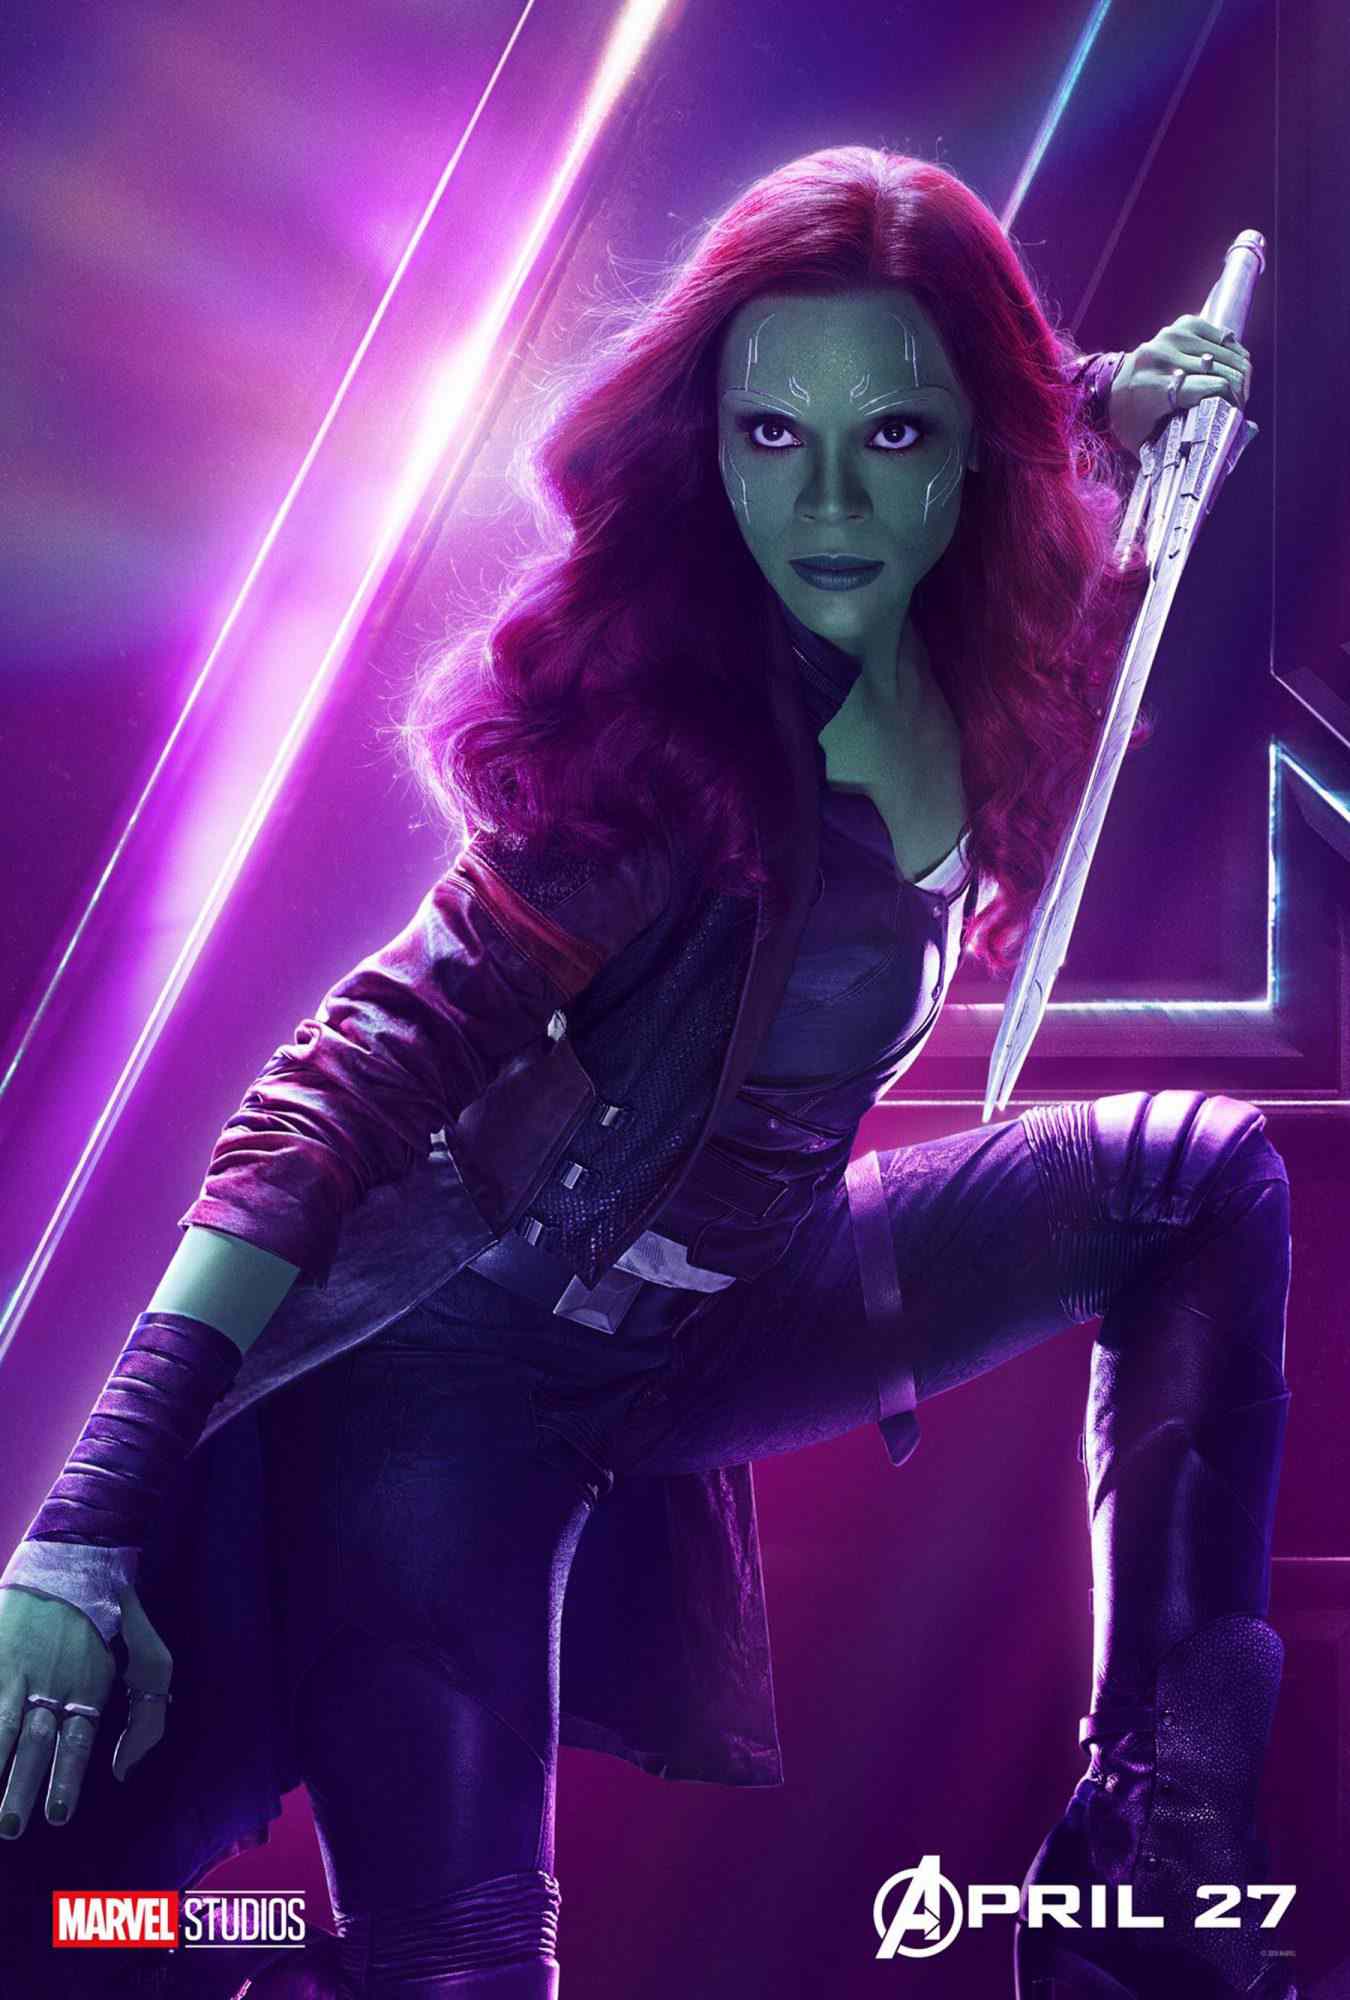 Avengers: Infinity War Character Posters CR: Marvel Studios